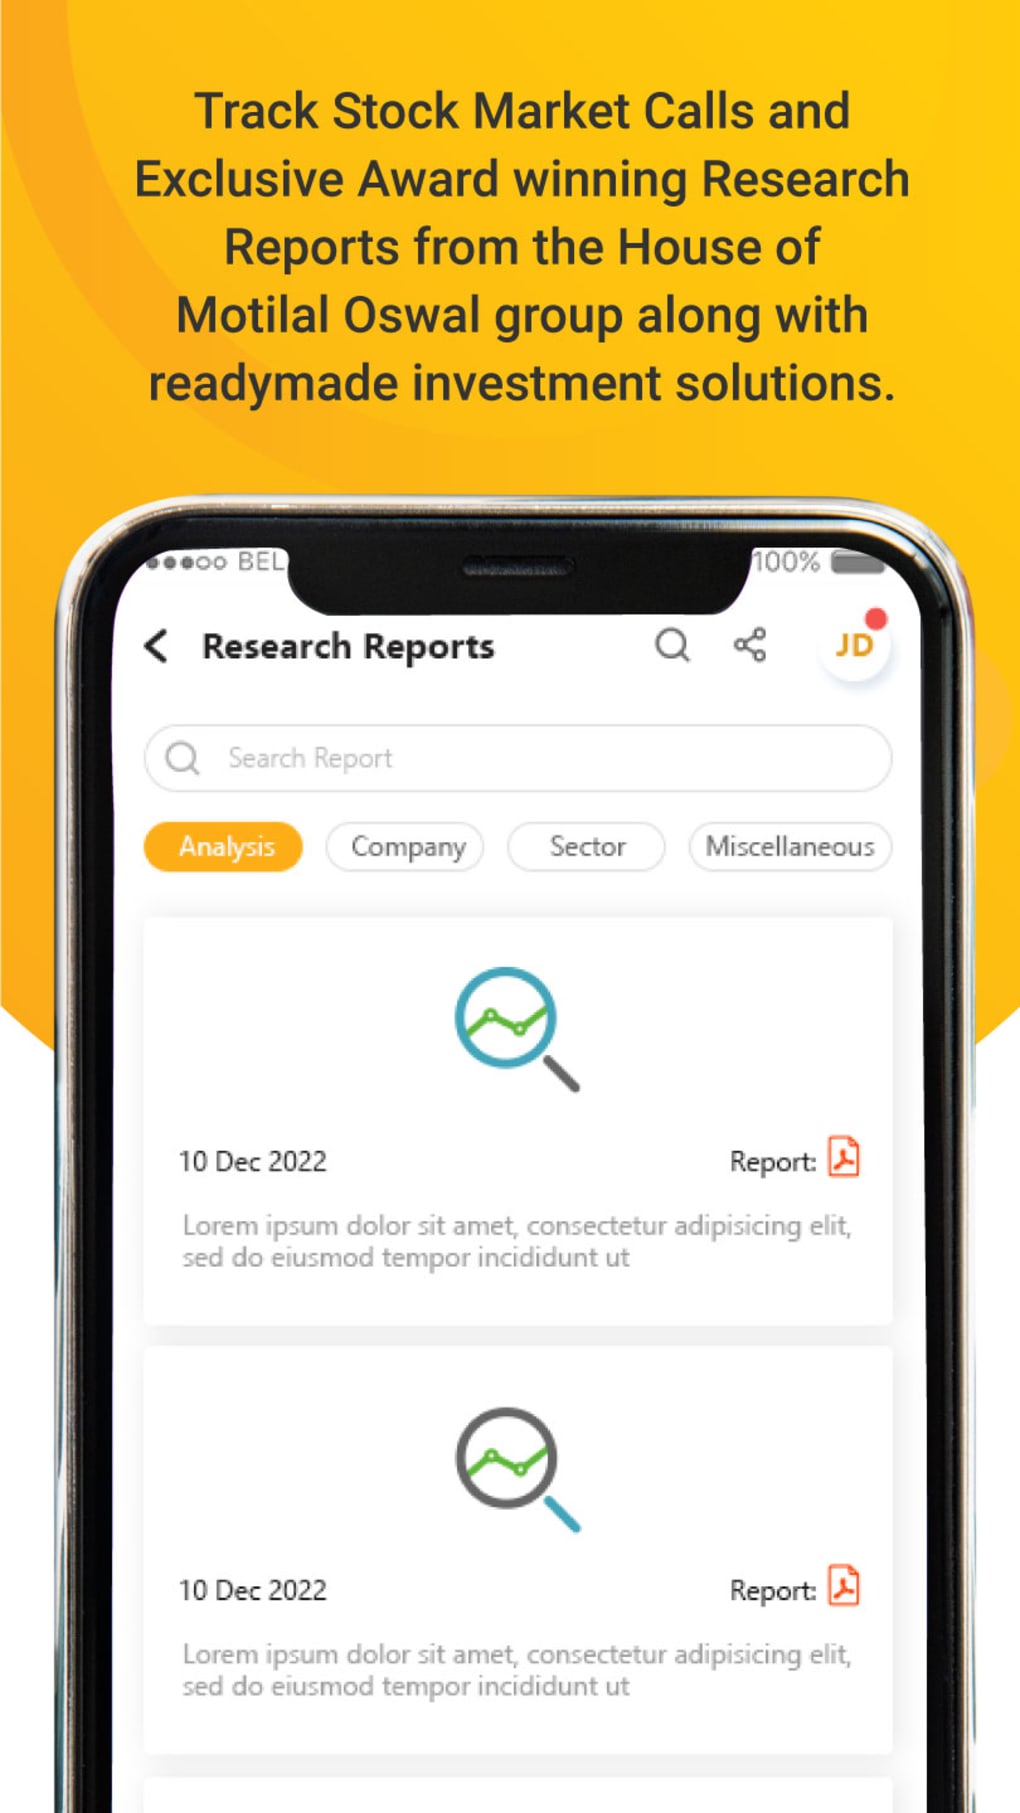 research 360 app